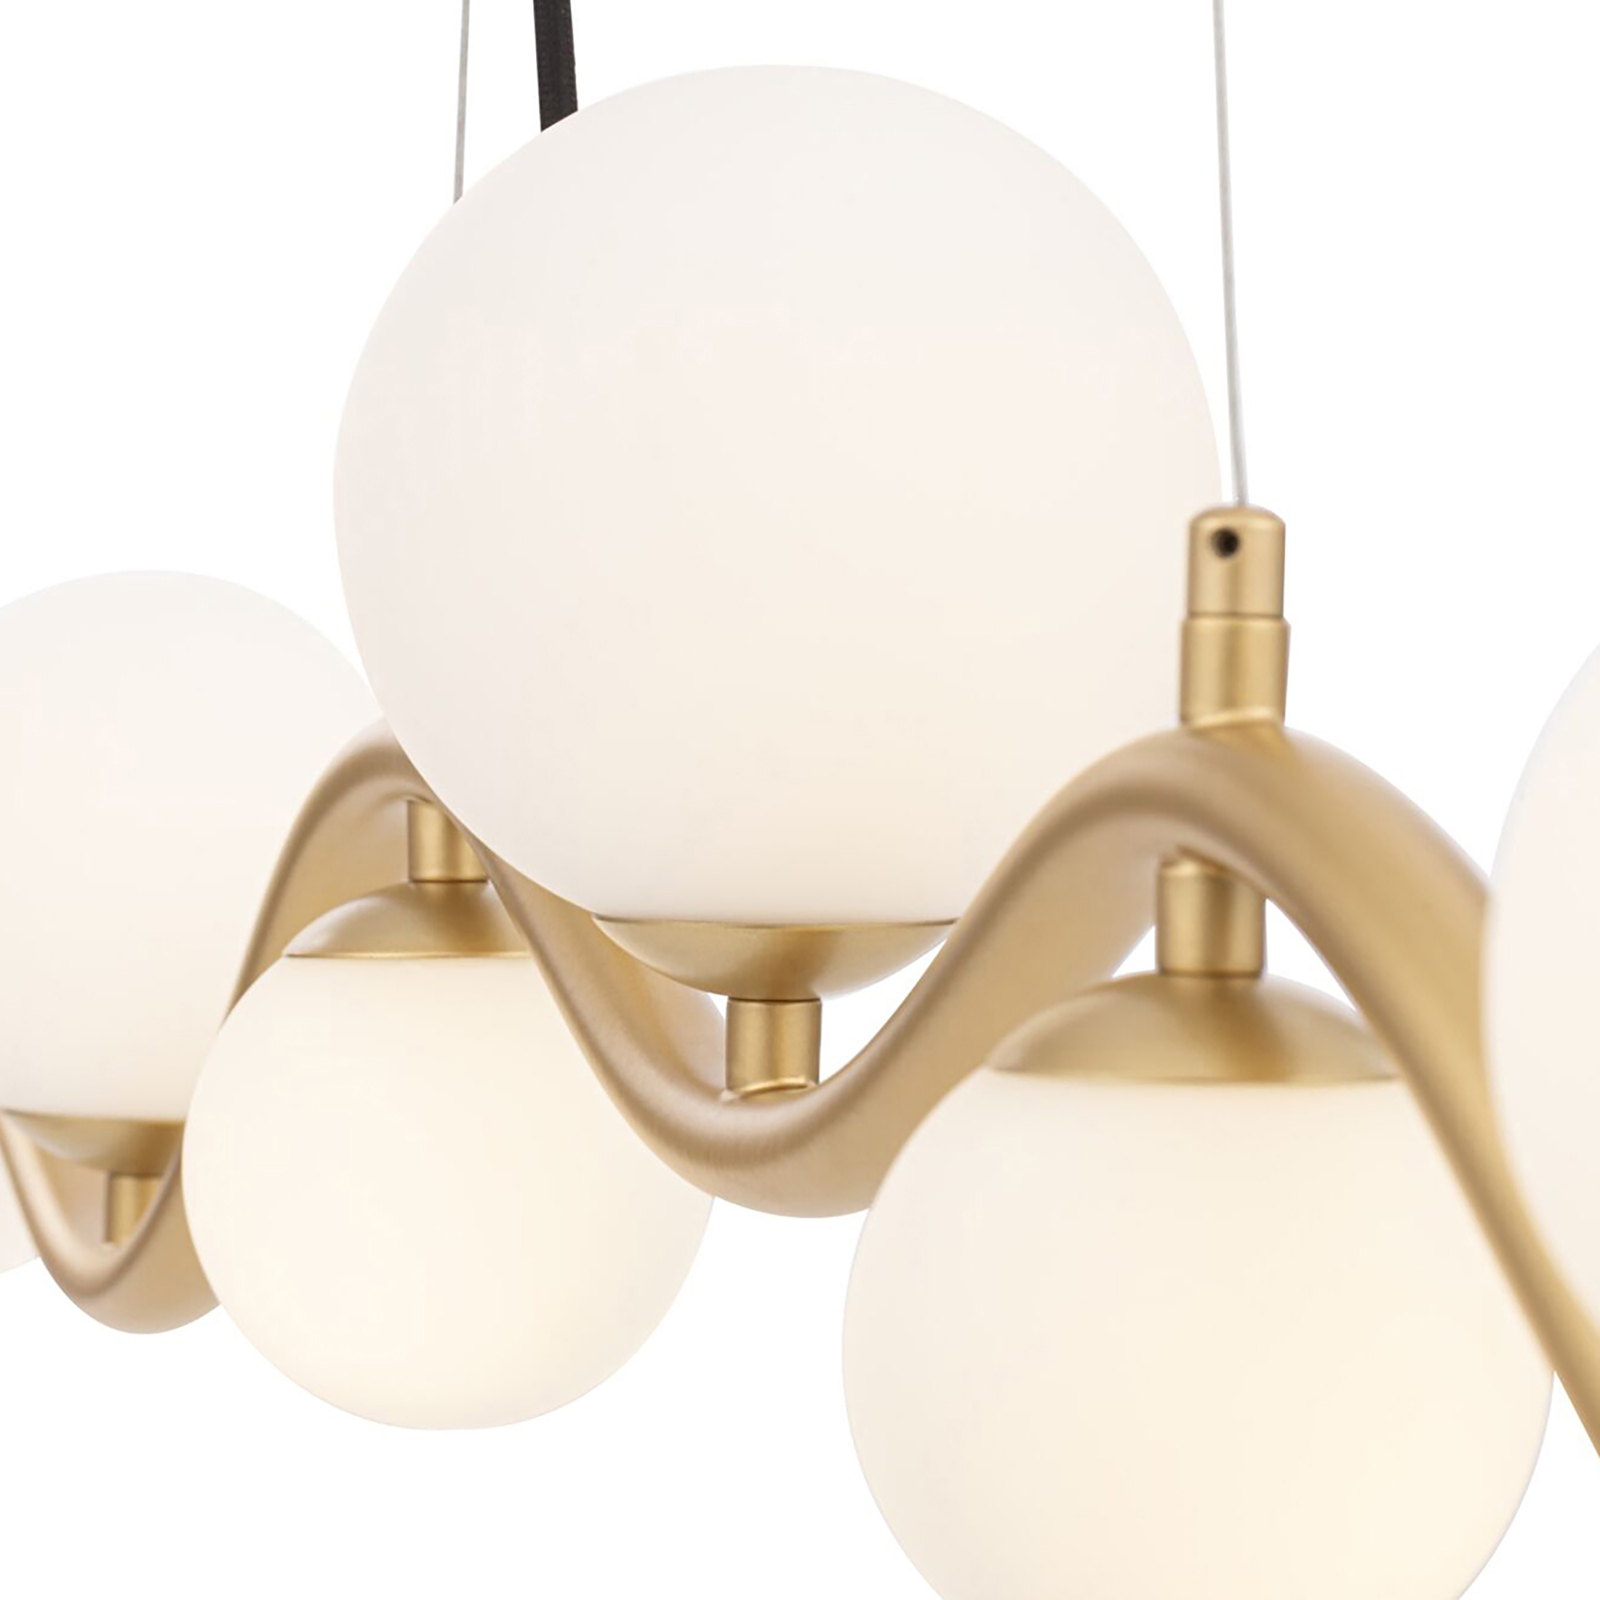 Maytoni Uva hanging light, 7-bulb, brass/white